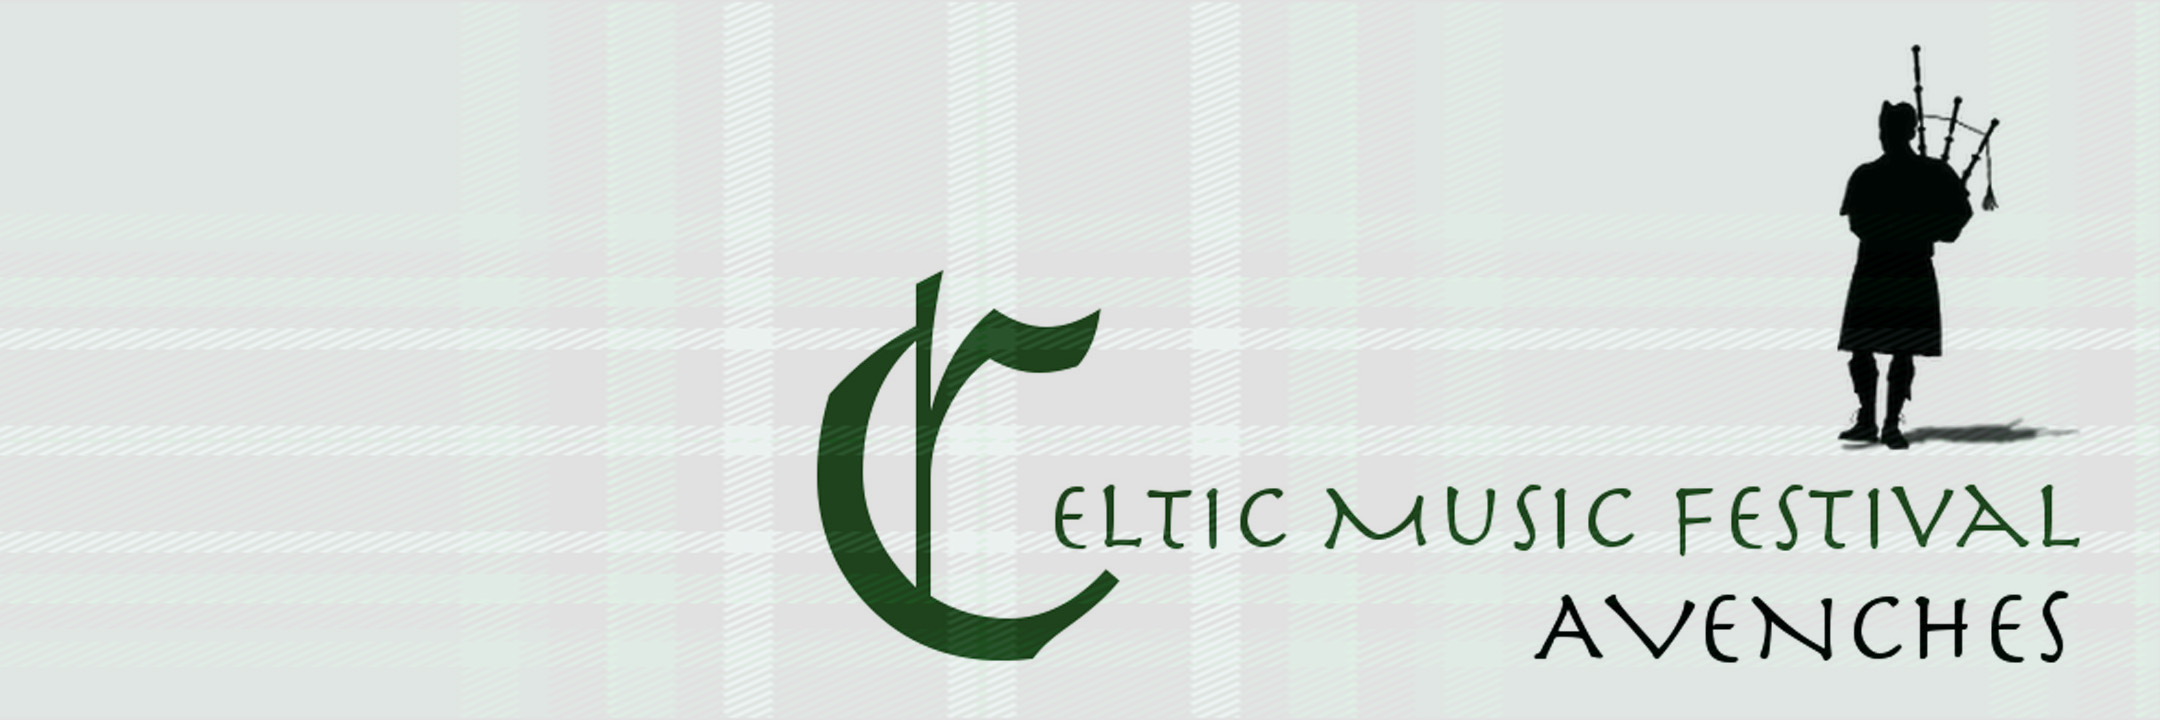 Celtic Music Festival 2014 - Avenches2014